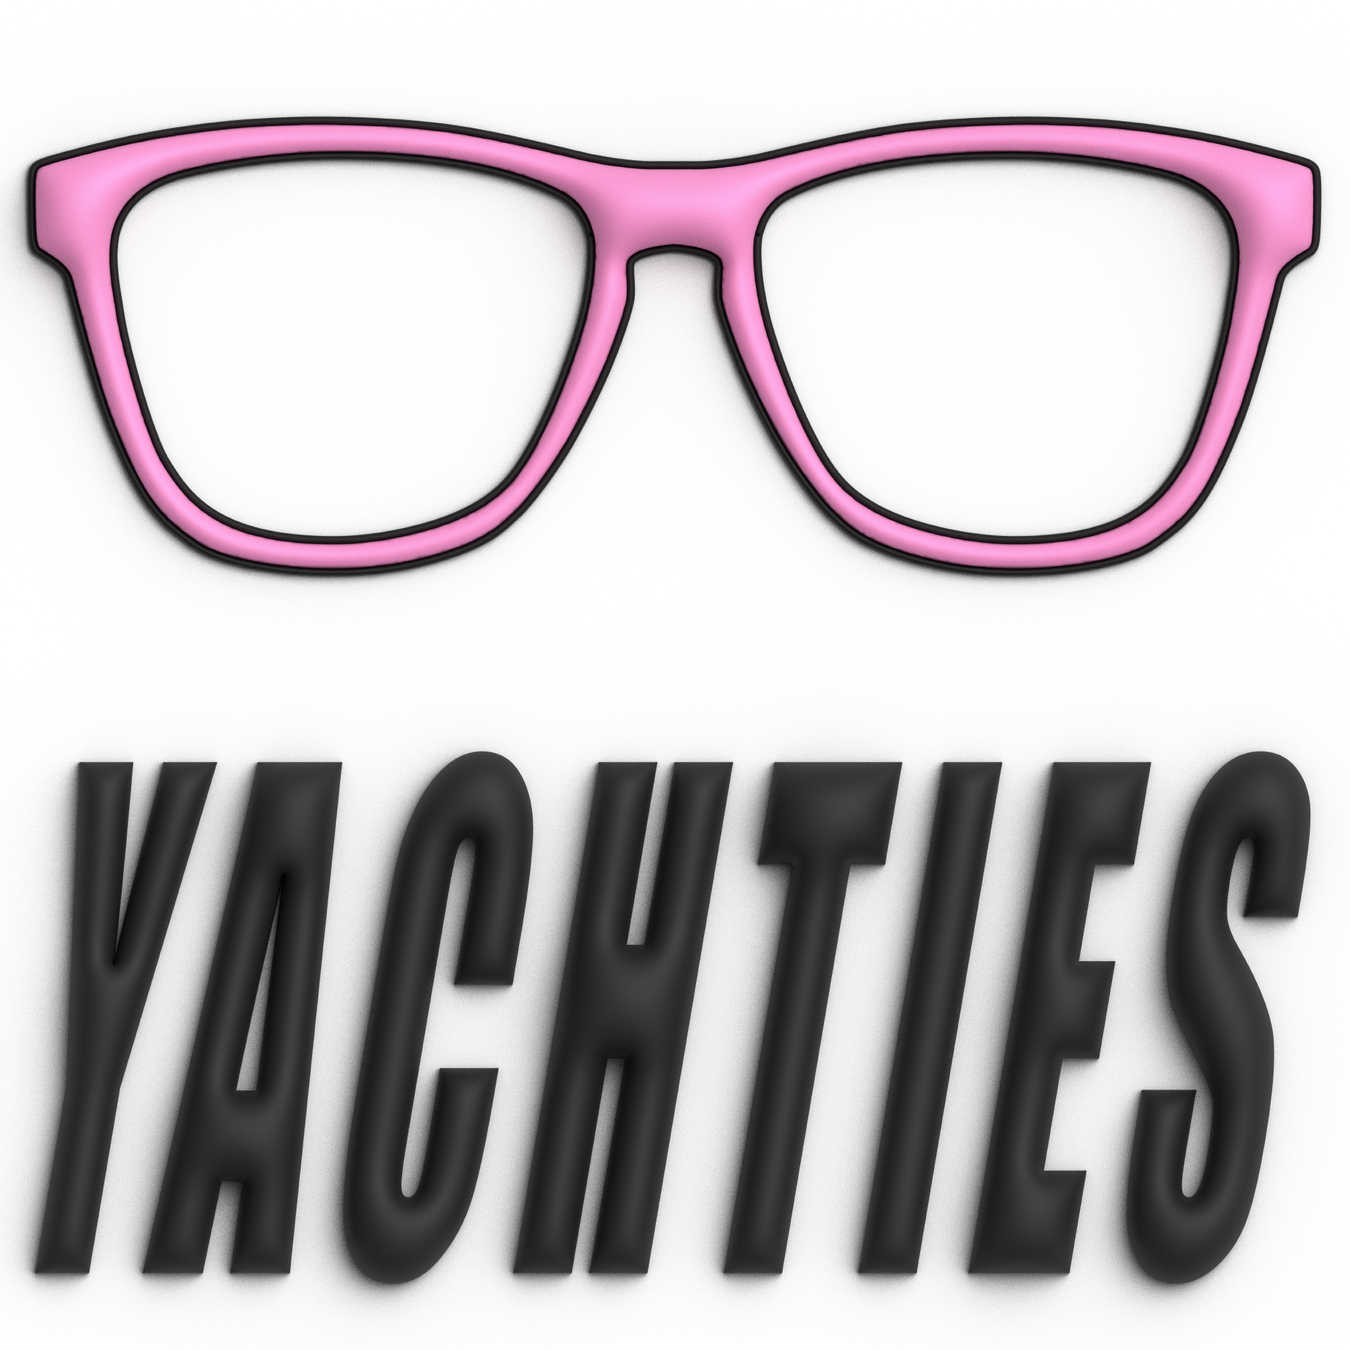 Yachties